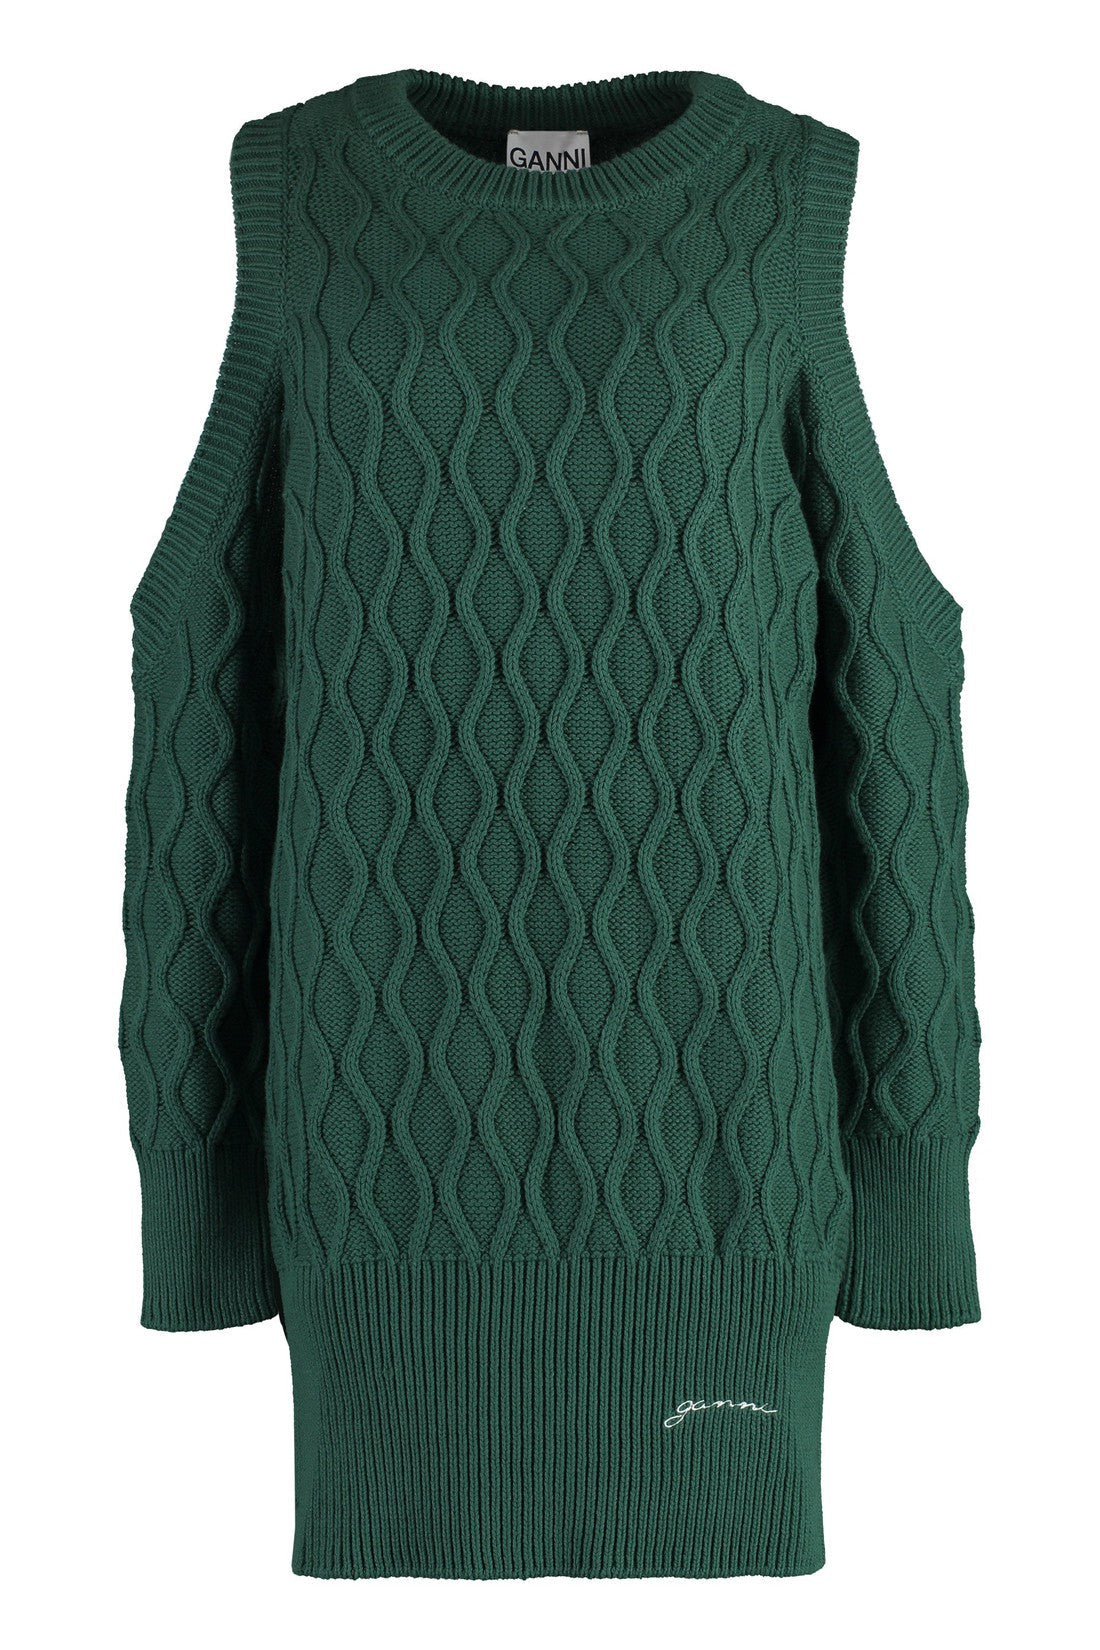 GANNI-OUTLET-SALE-Knitted dress-ARCHIVIST